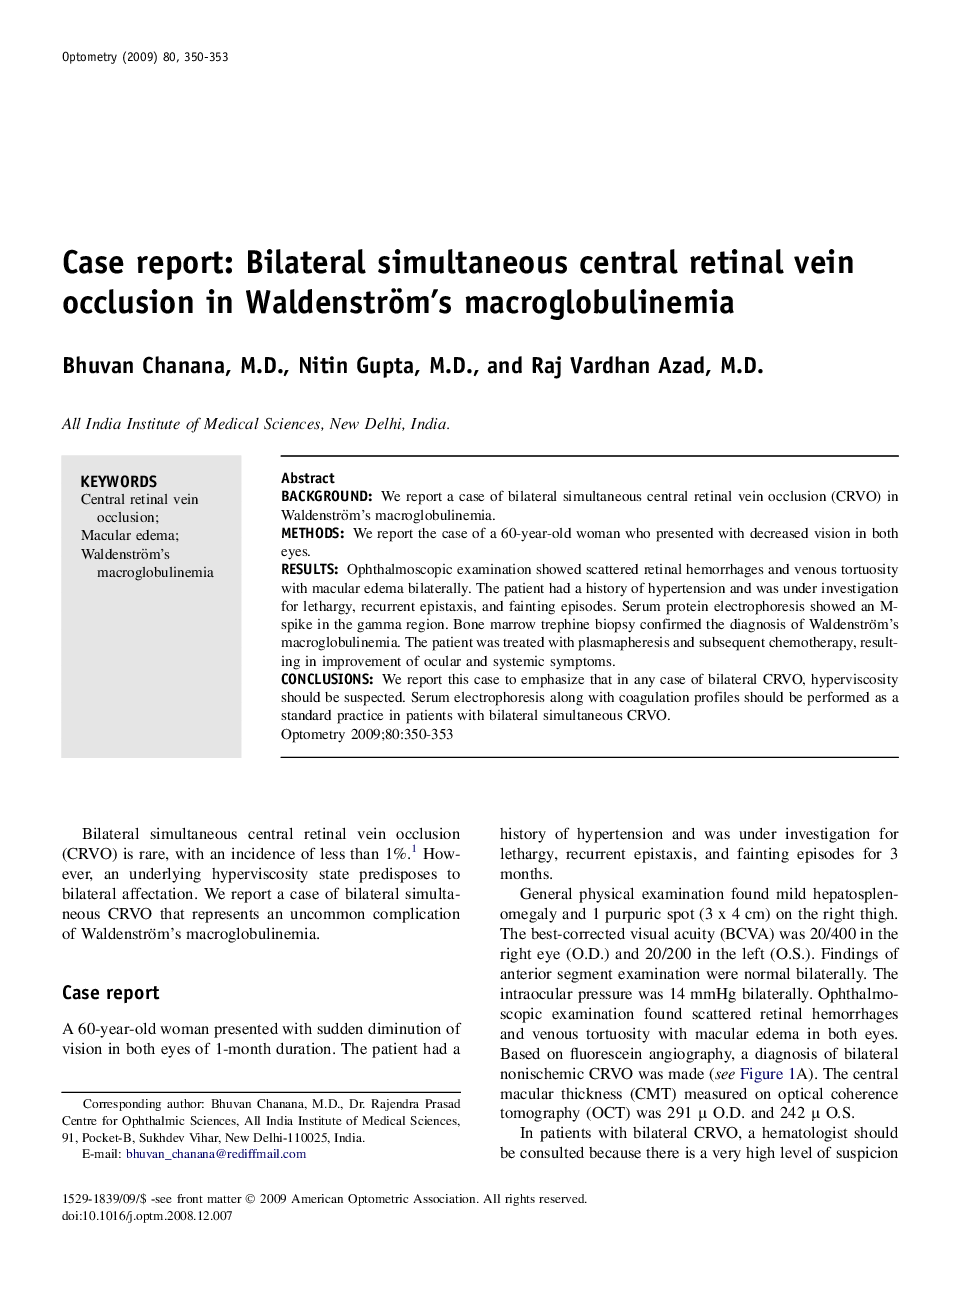 Case report: Bilateral simultaneous central retinal vein occlusion in Waldenström's macroglobulinemia